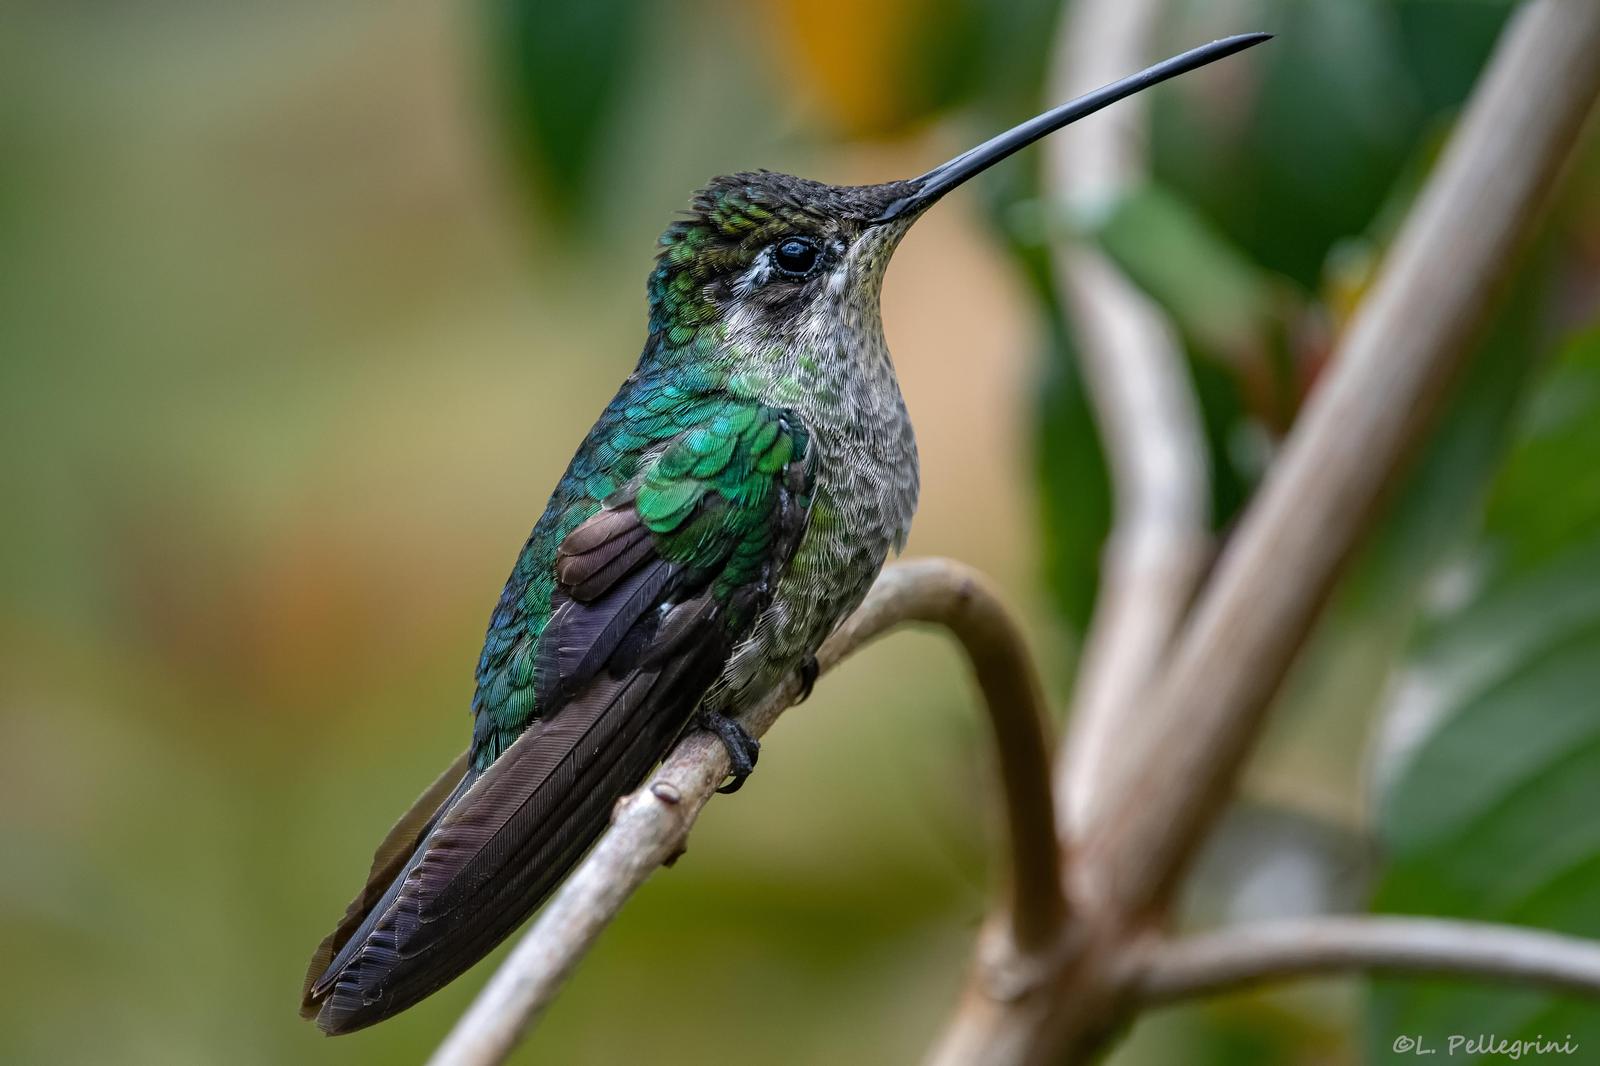 Talamanca Hummingbird Photo by Laurence Pellegrini